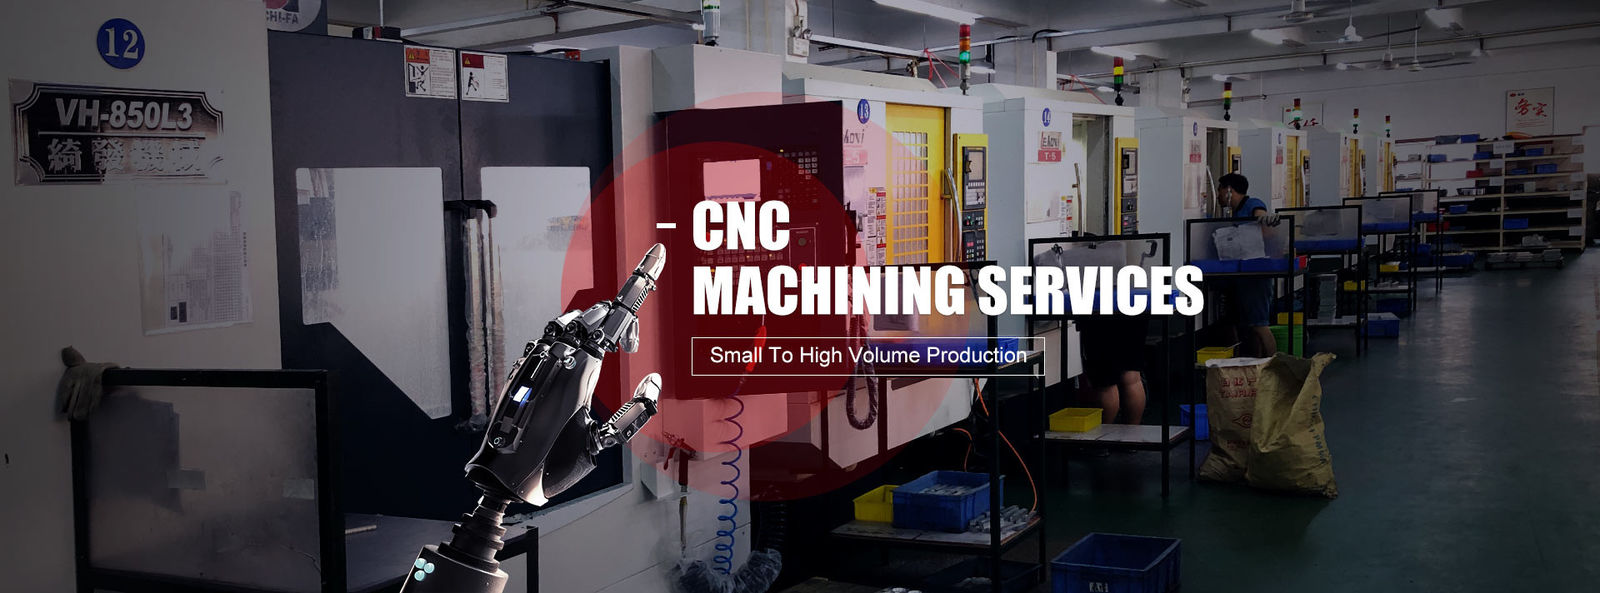 quality CNC Milling Parts factory